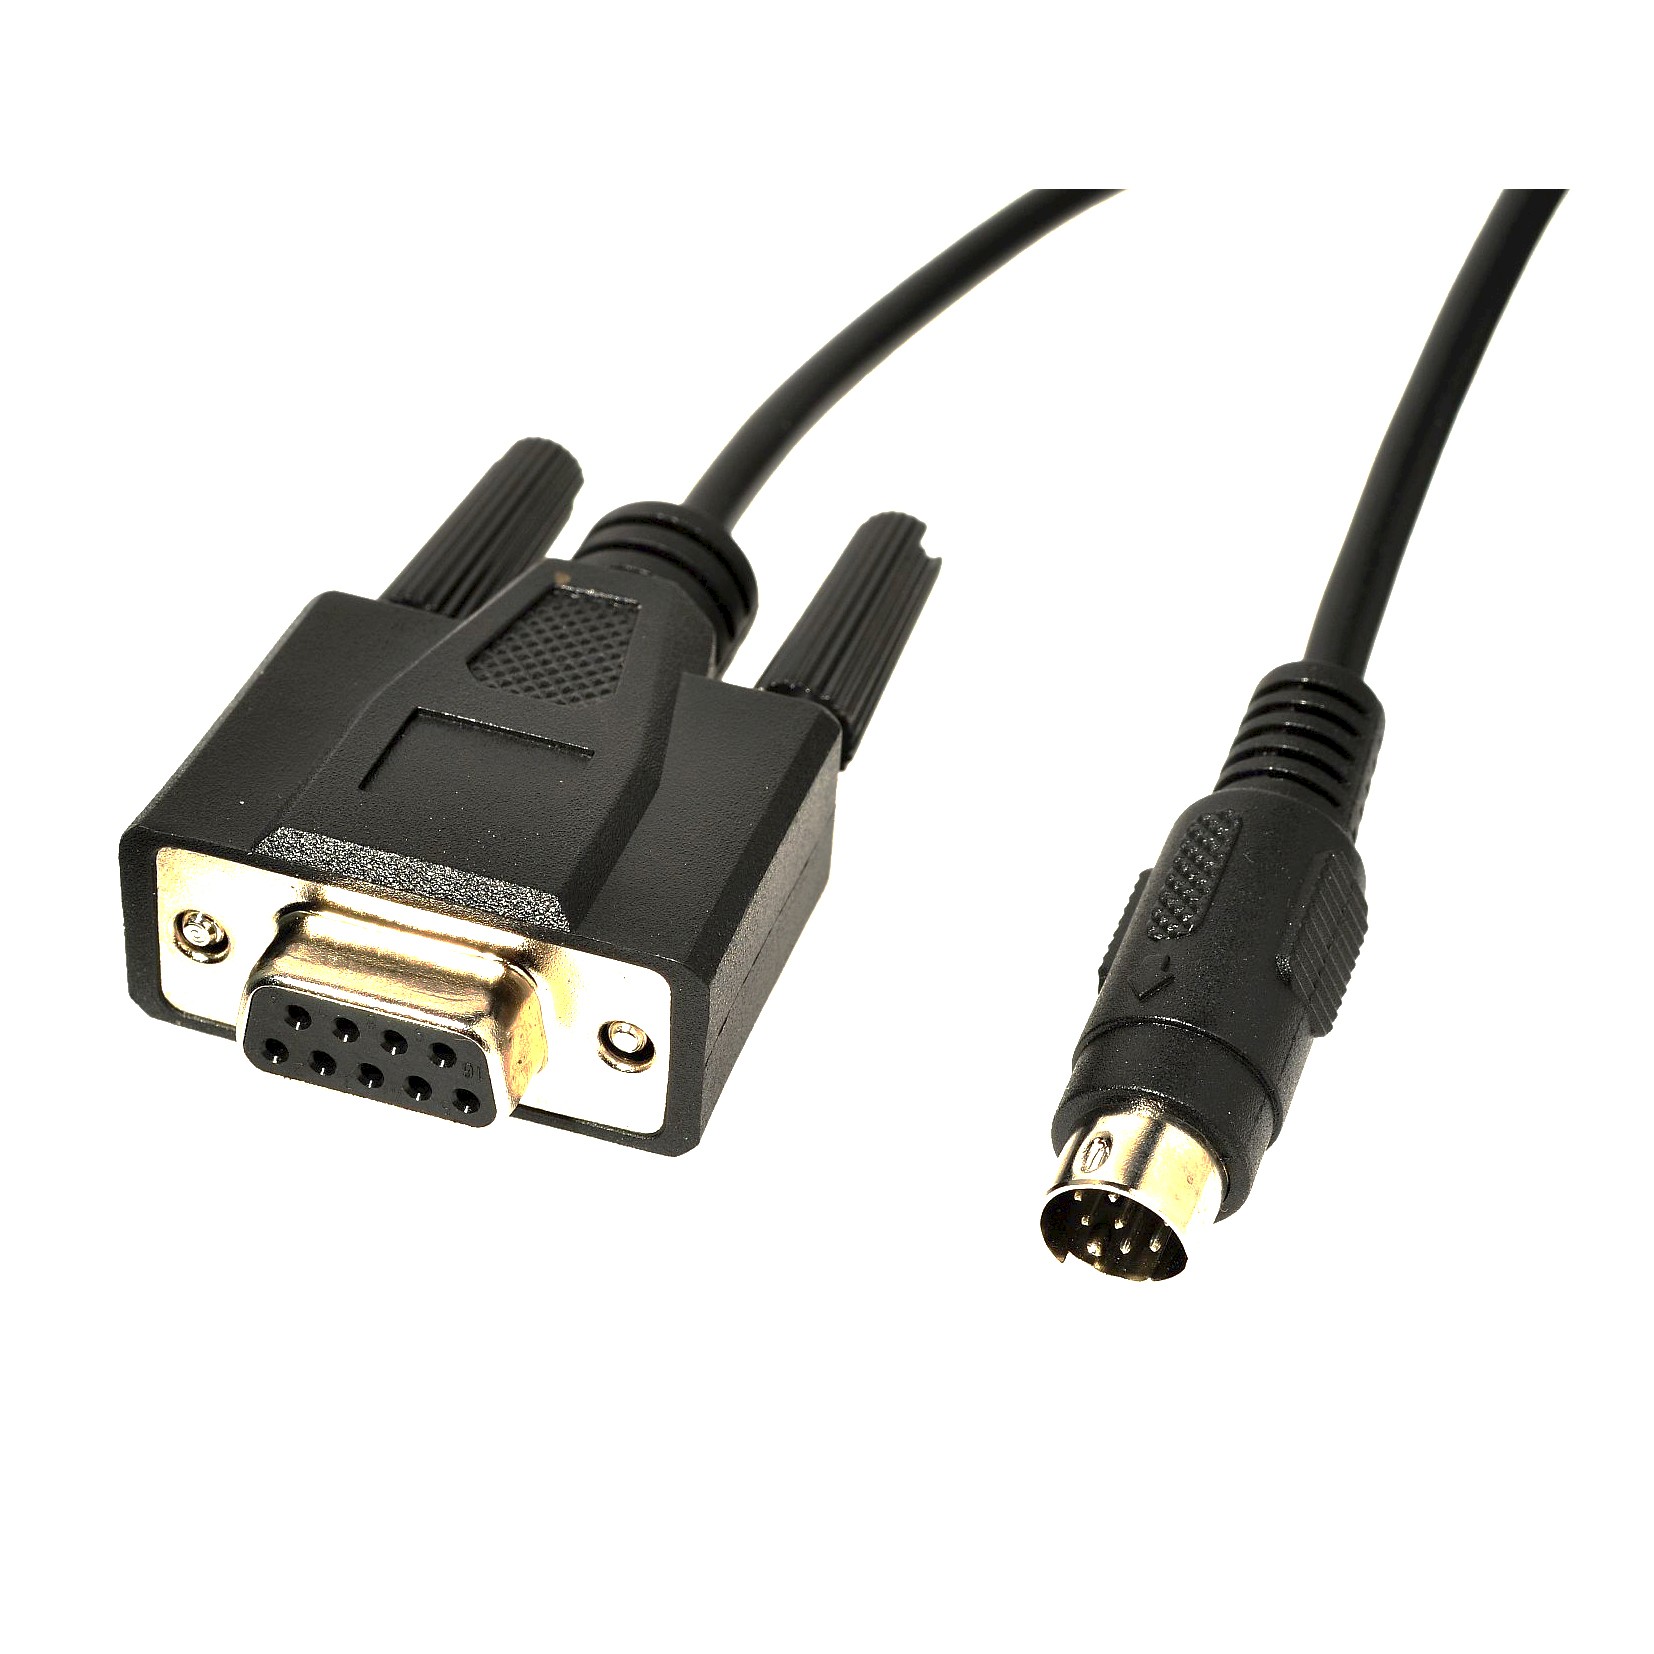 Alicat MD8DB9 Cable, mini Din, 9 pin D-sub Serial connector